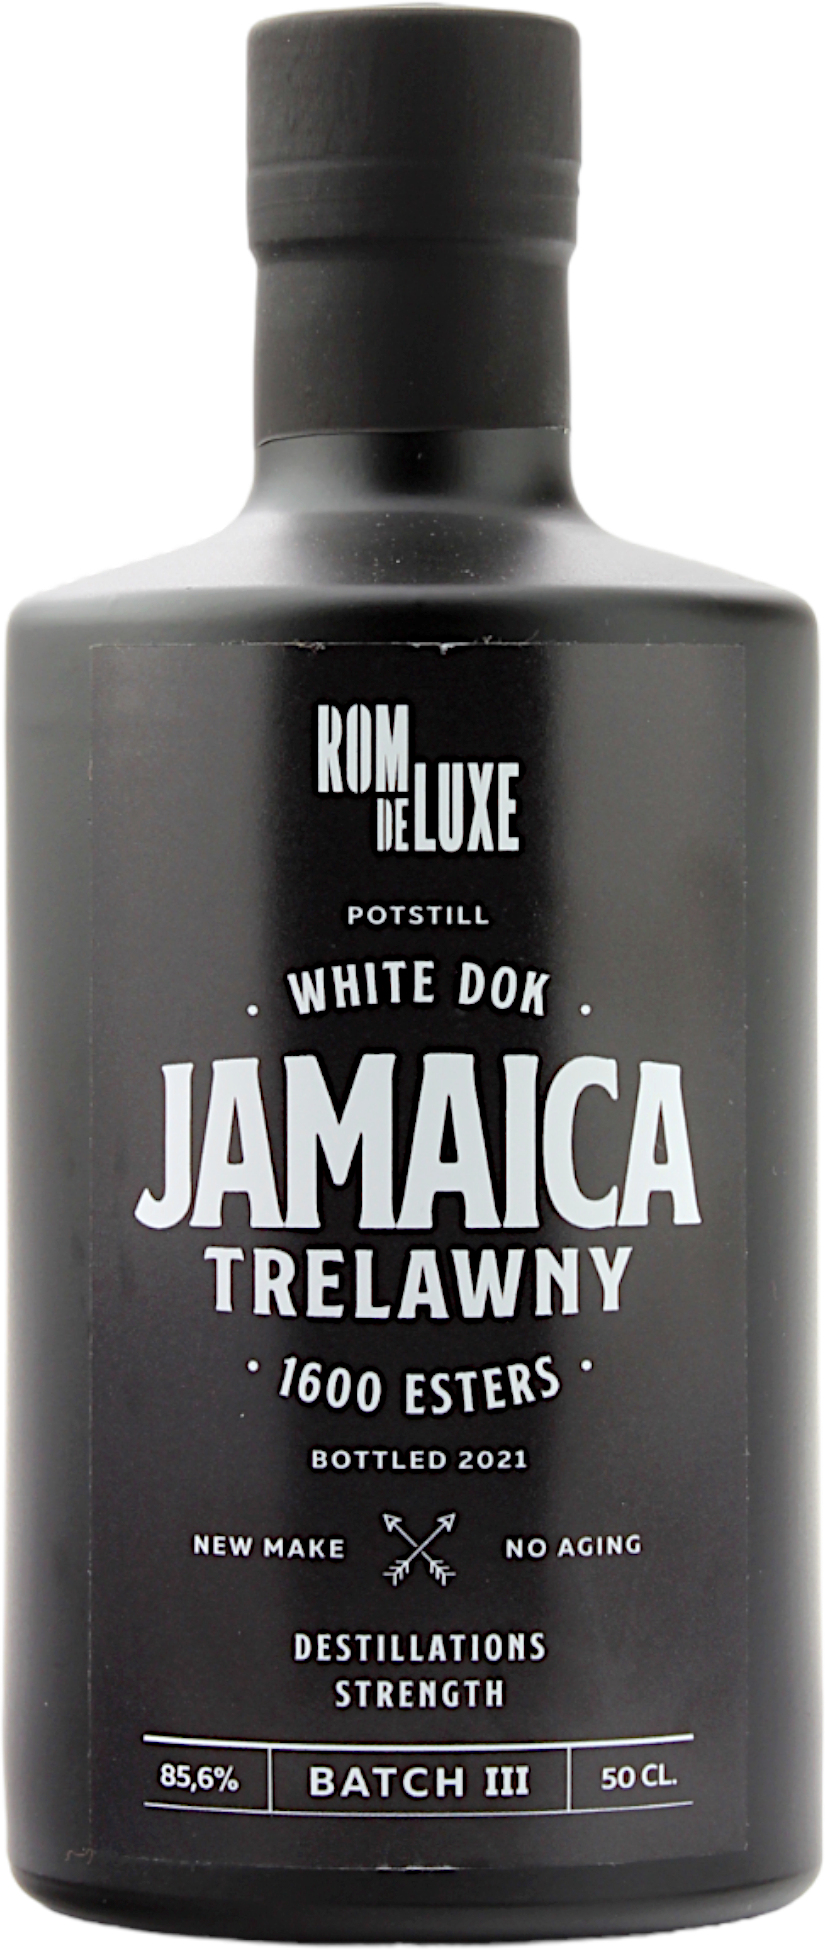 Jamaica Trelawny Parish TECC Batch I RomDeLuxe 85.3% 0,5l